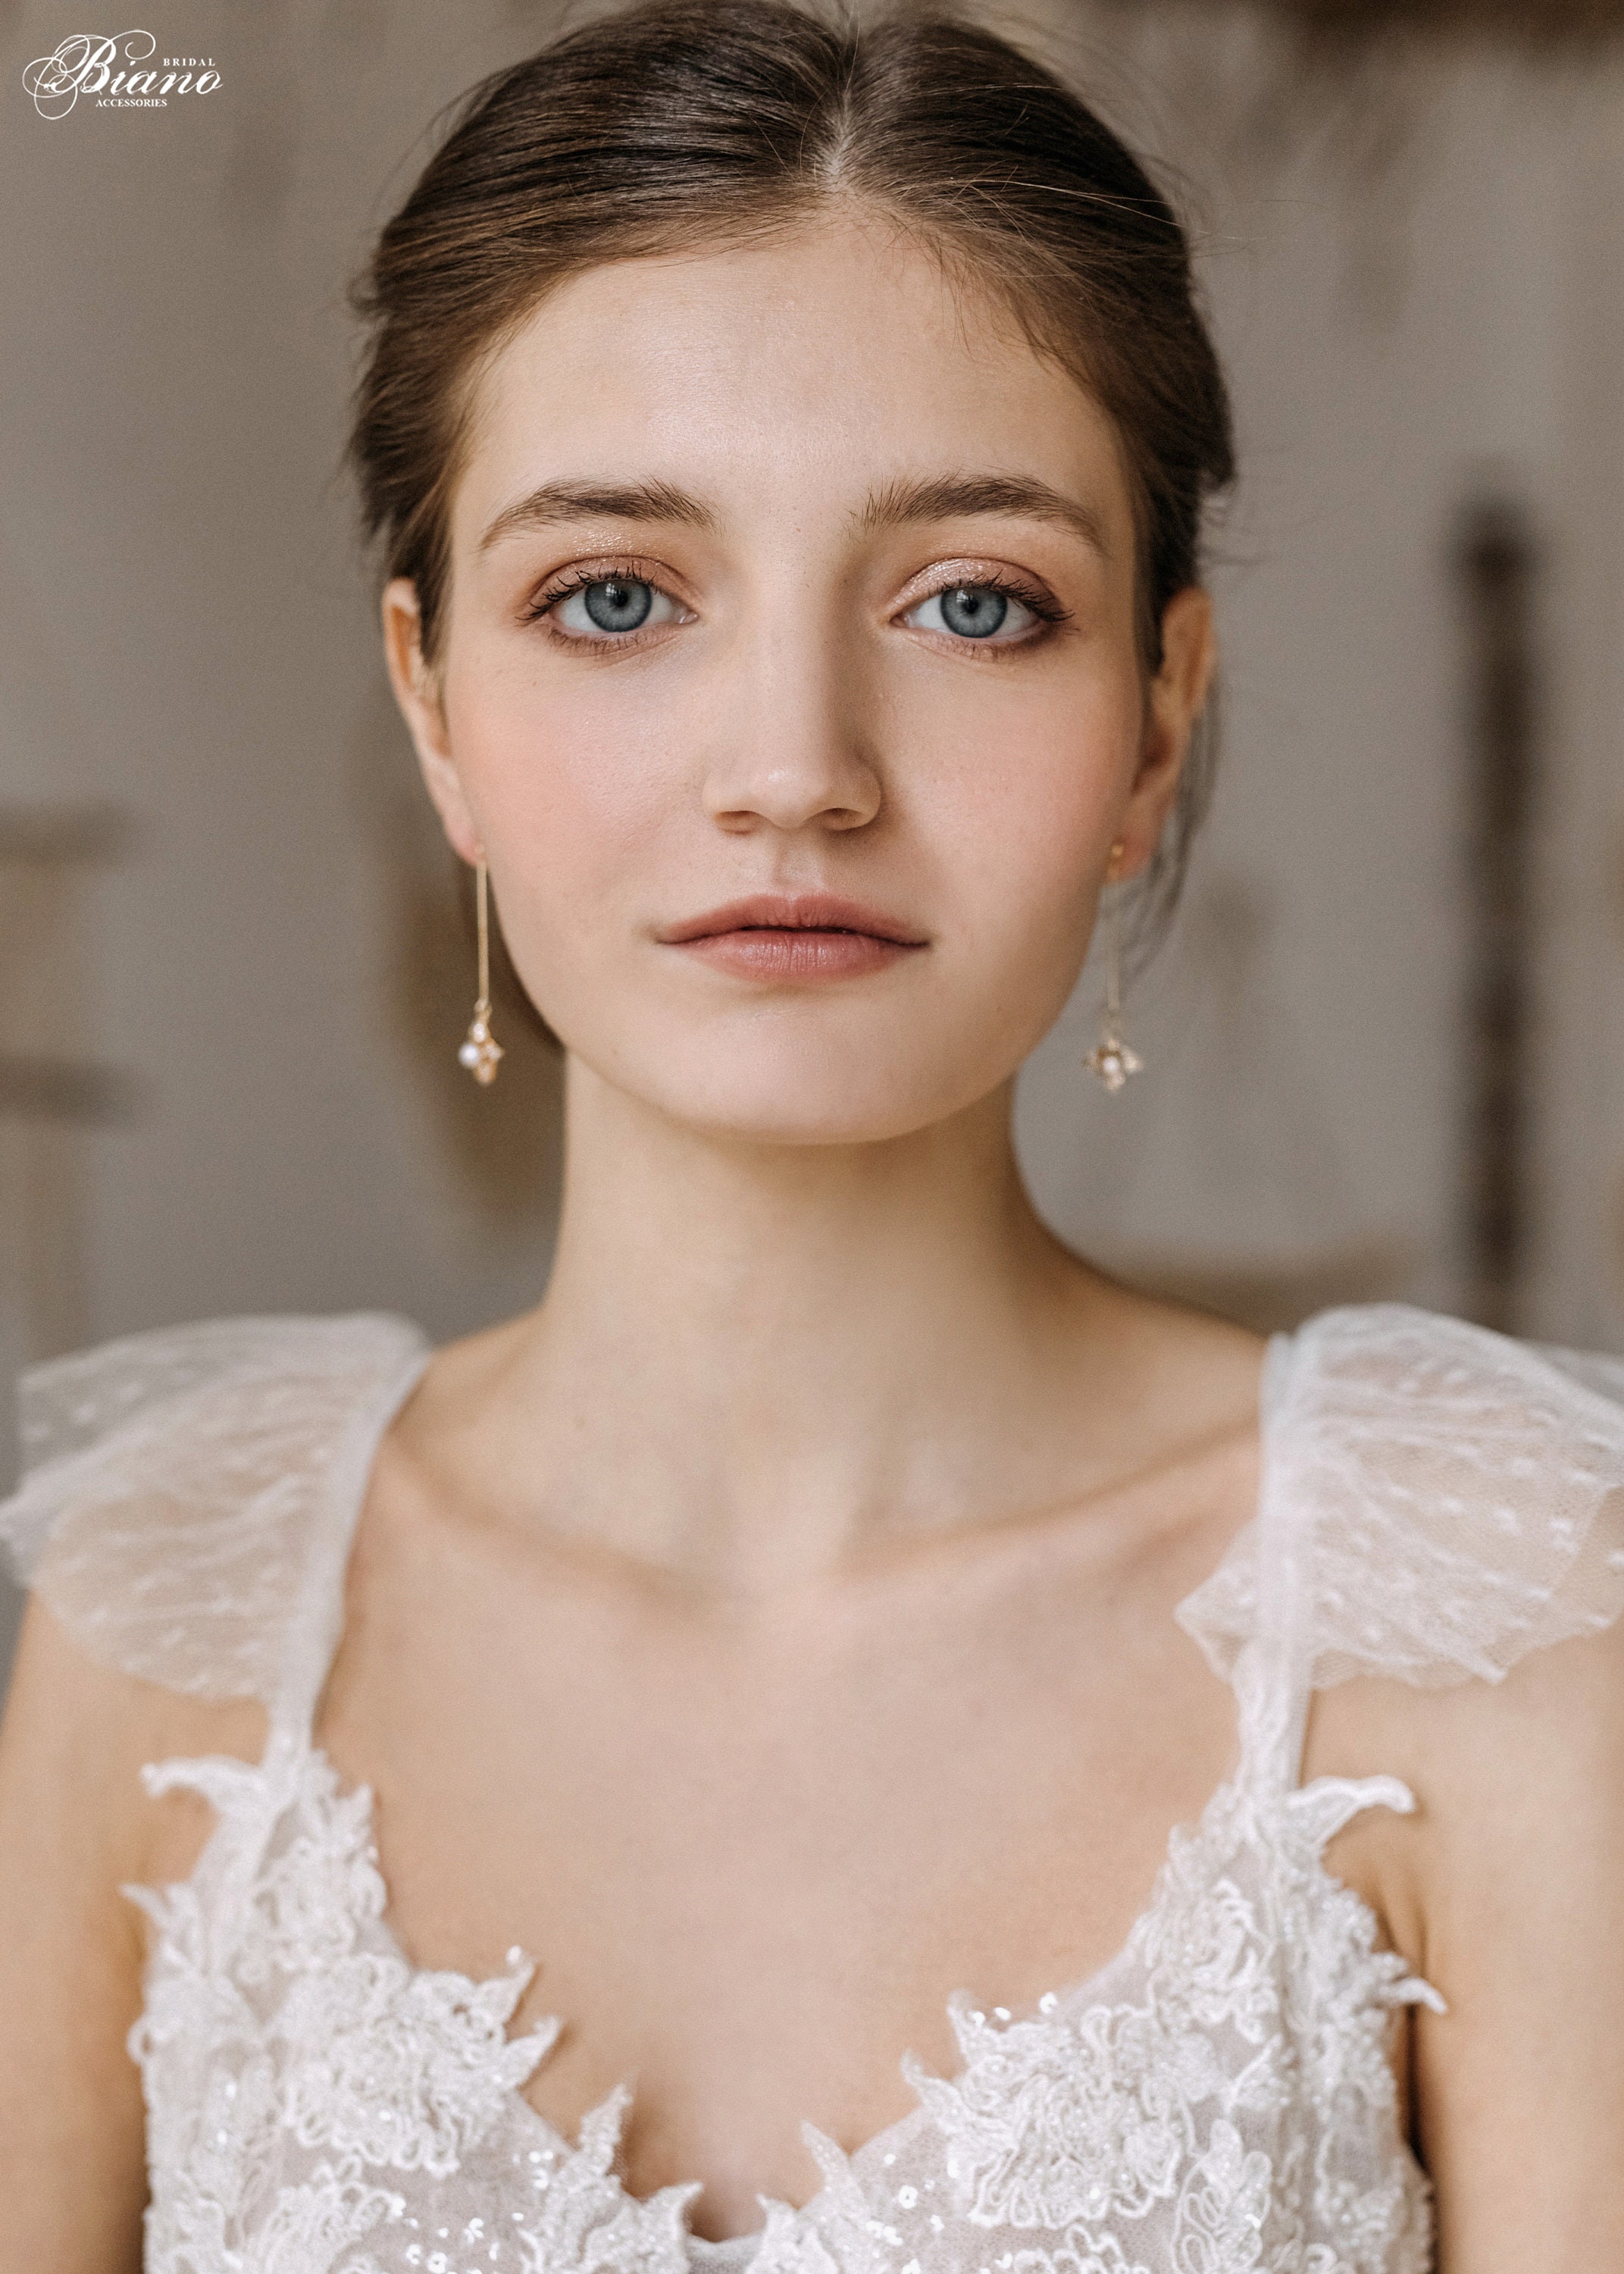 Gold dangle earrings Threader Earrings Pearl earrings Wedding | Etsy